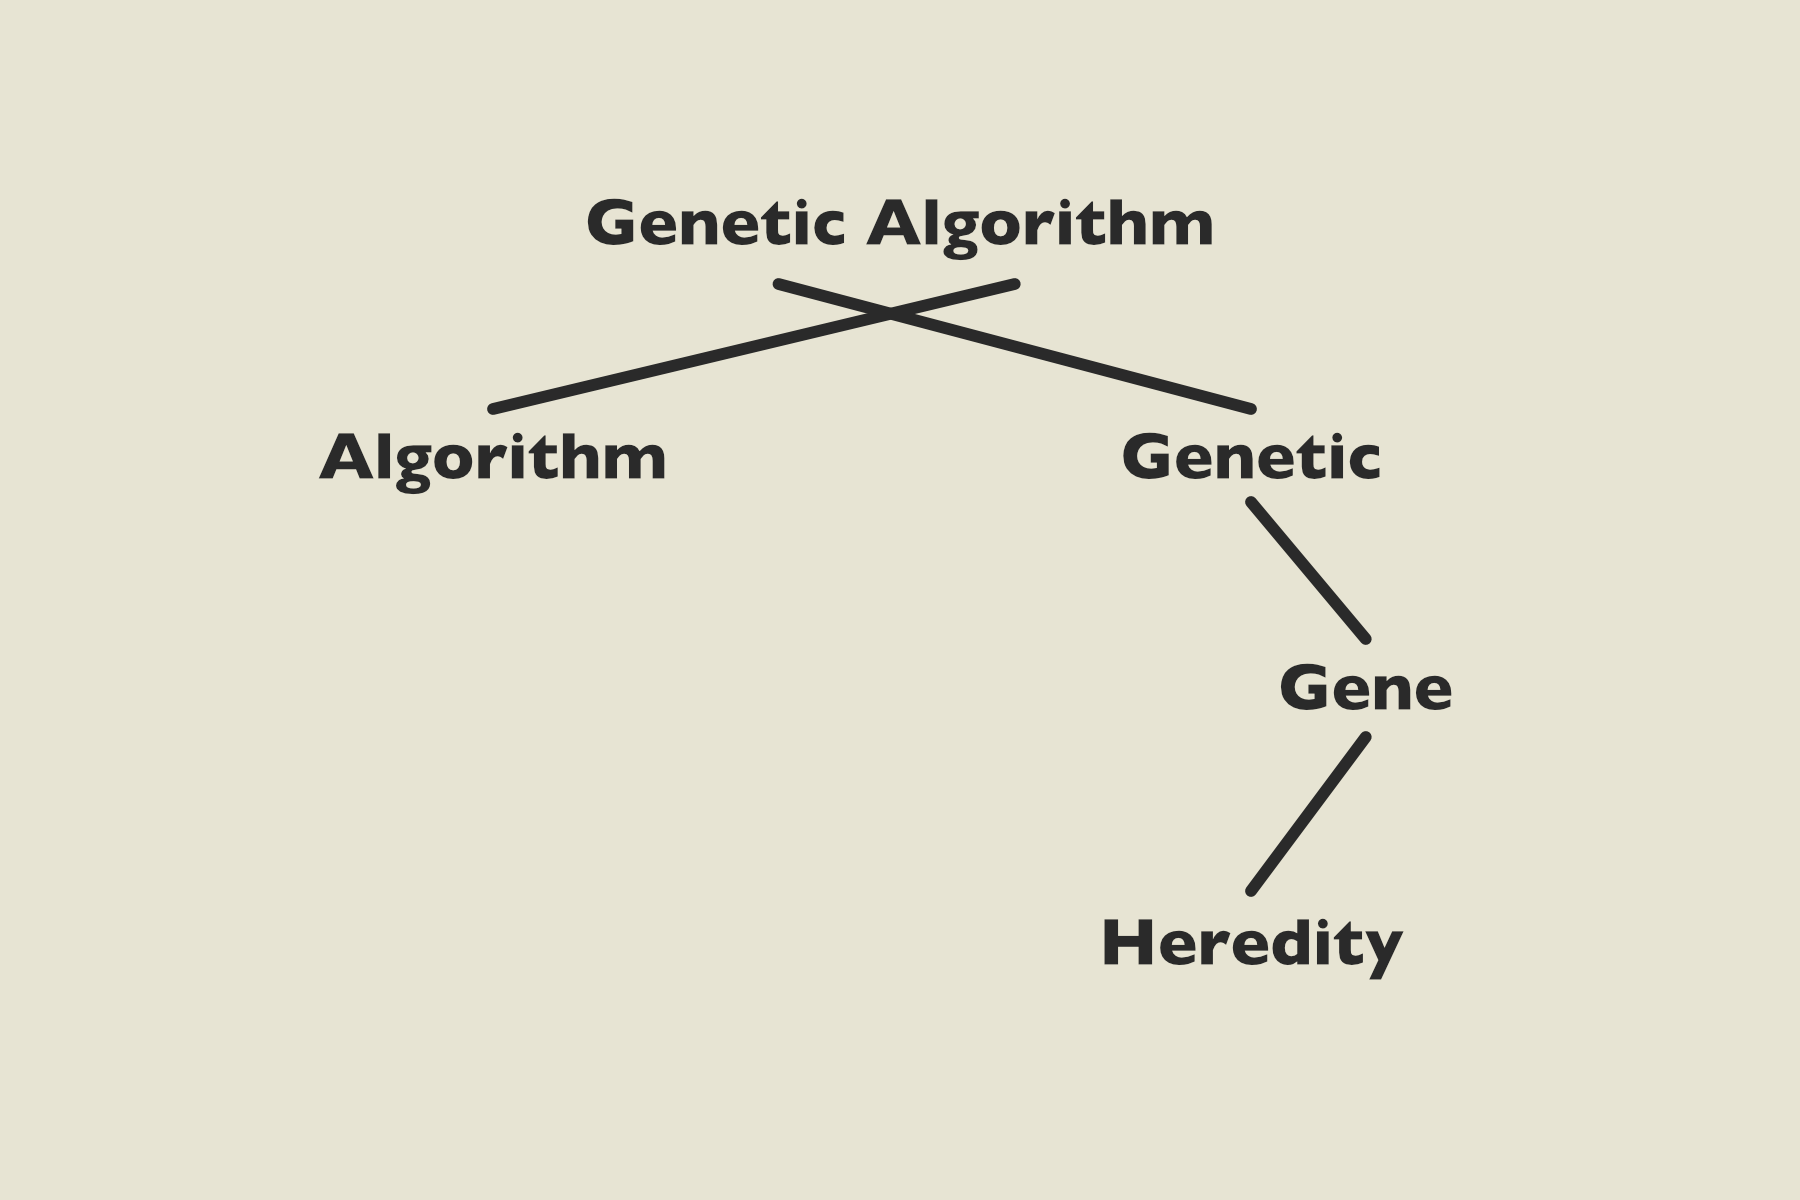 Genetic Algorithm = (Gene + Heredity) + Algorithm